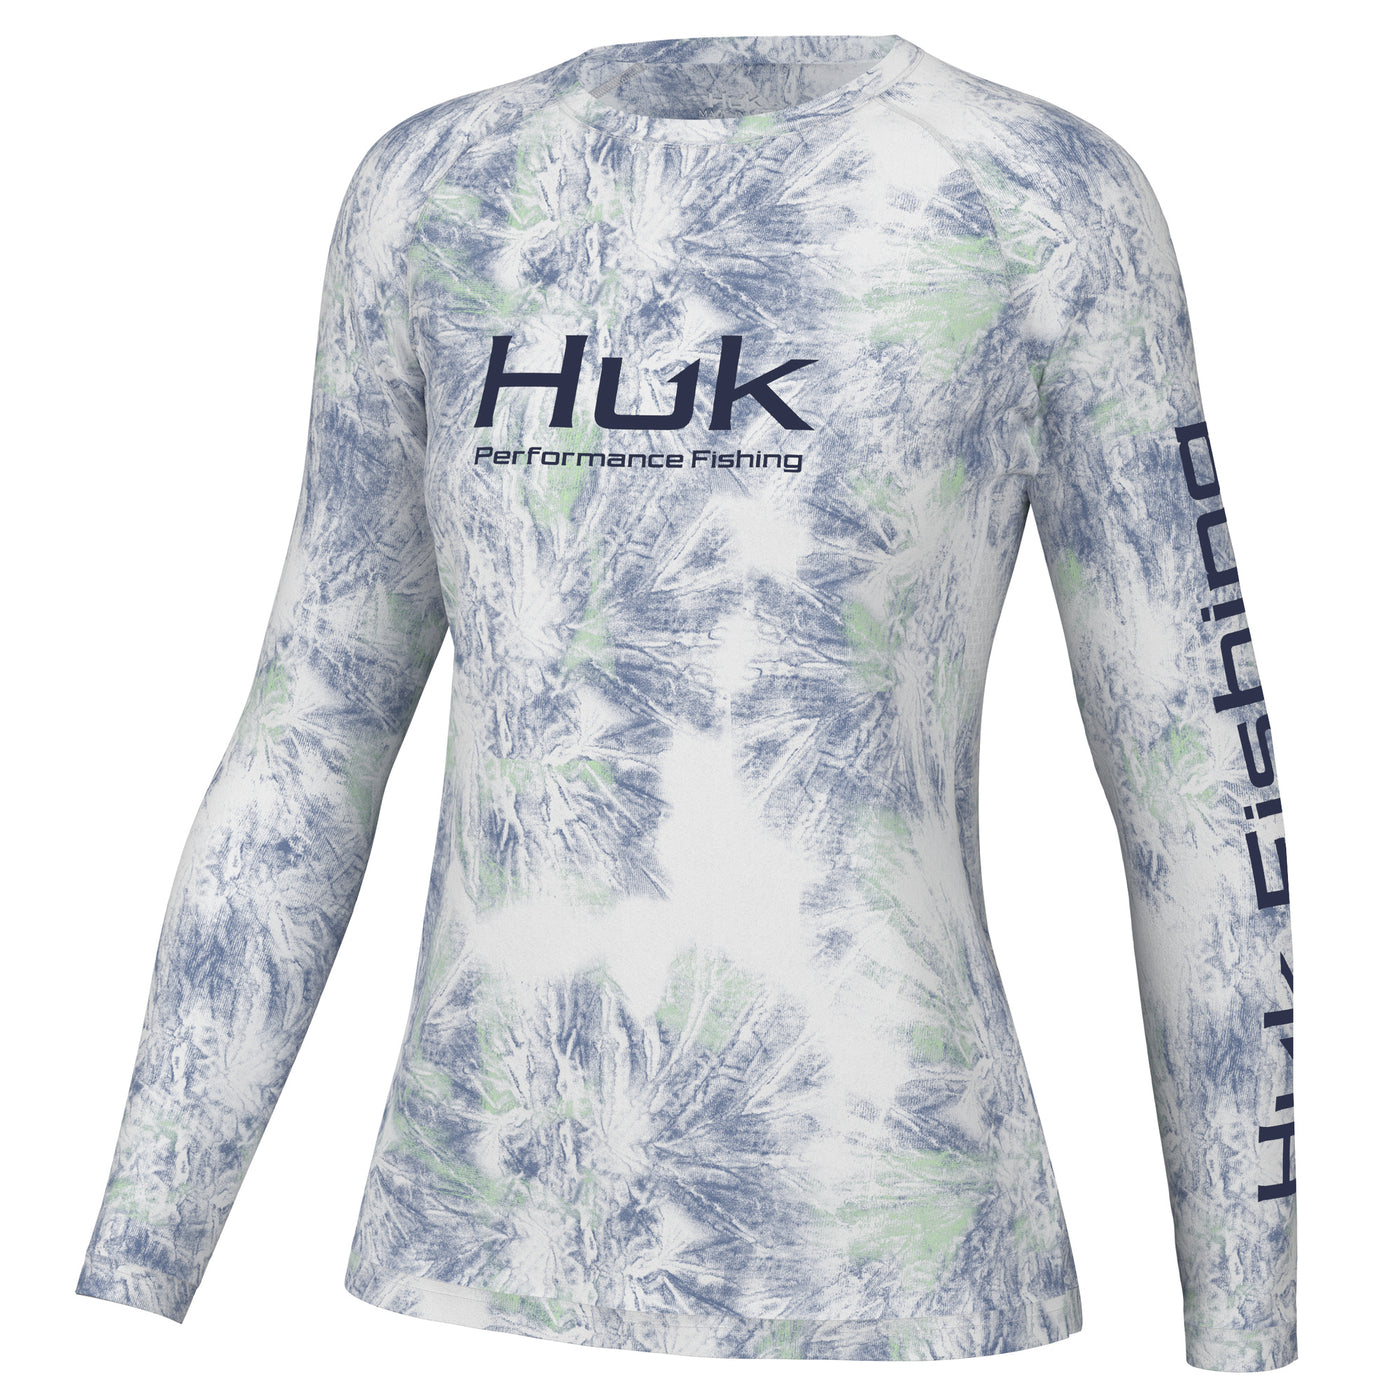 Huk Womens Pursuit Performance Shirt